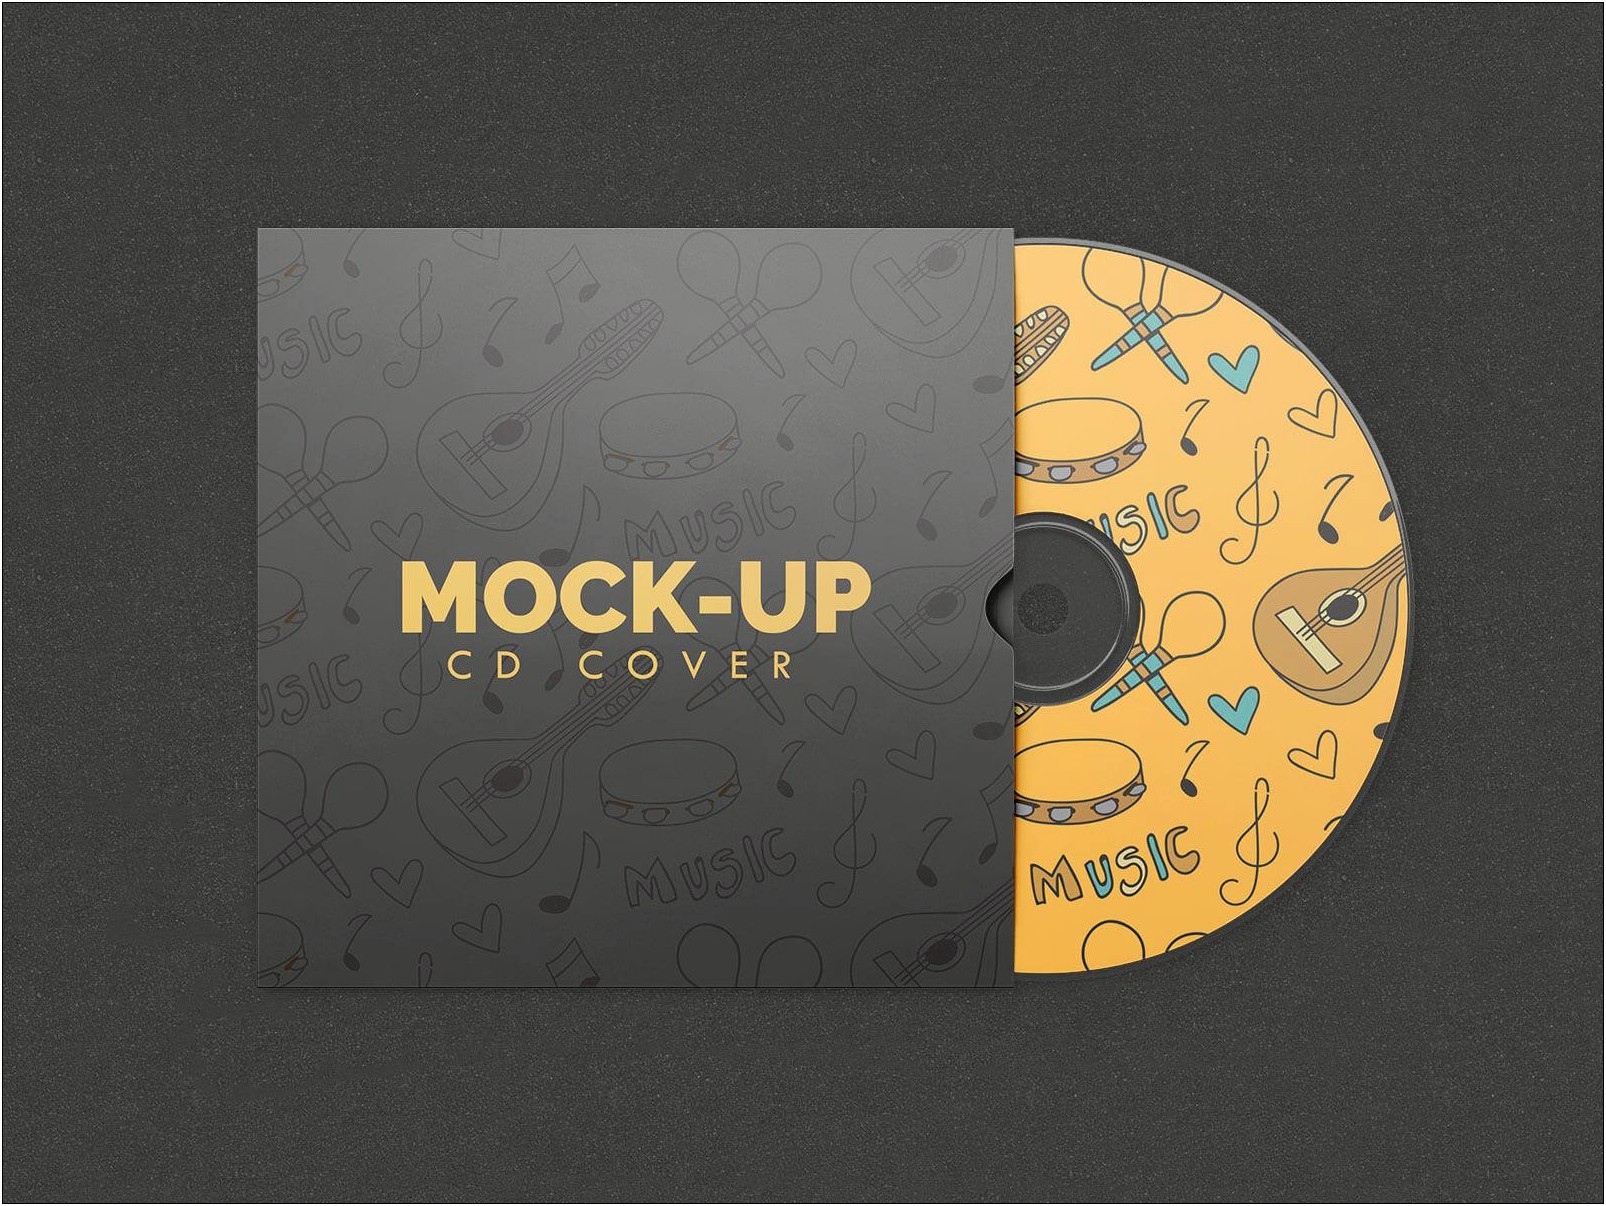 Album Cover Mockup Template Psd Free